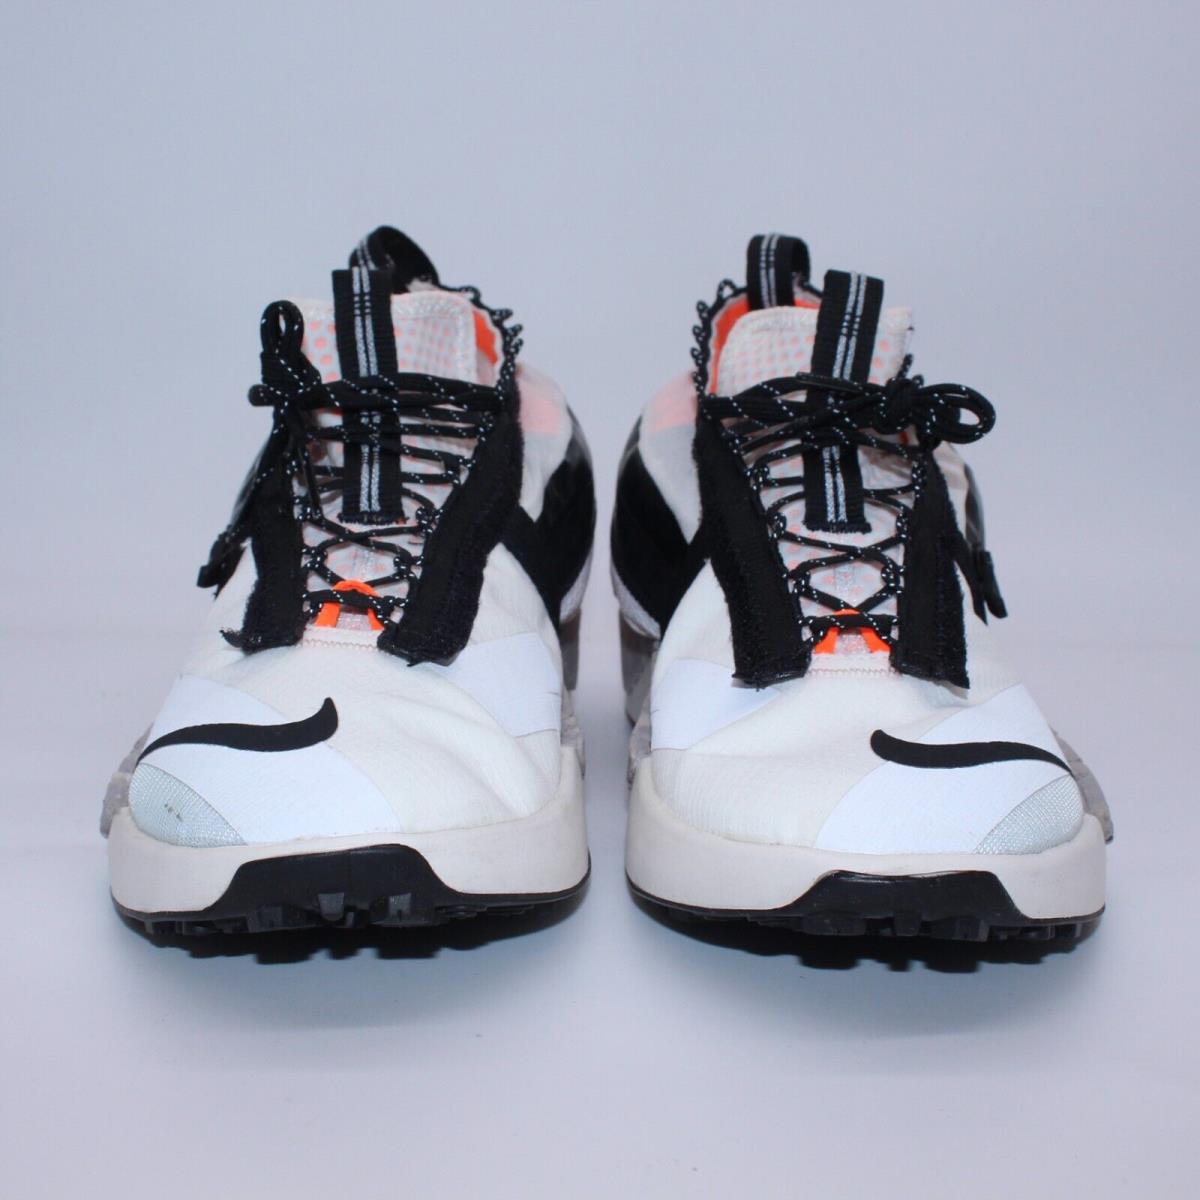 Nike shoes  - Summit White, Black, White 1